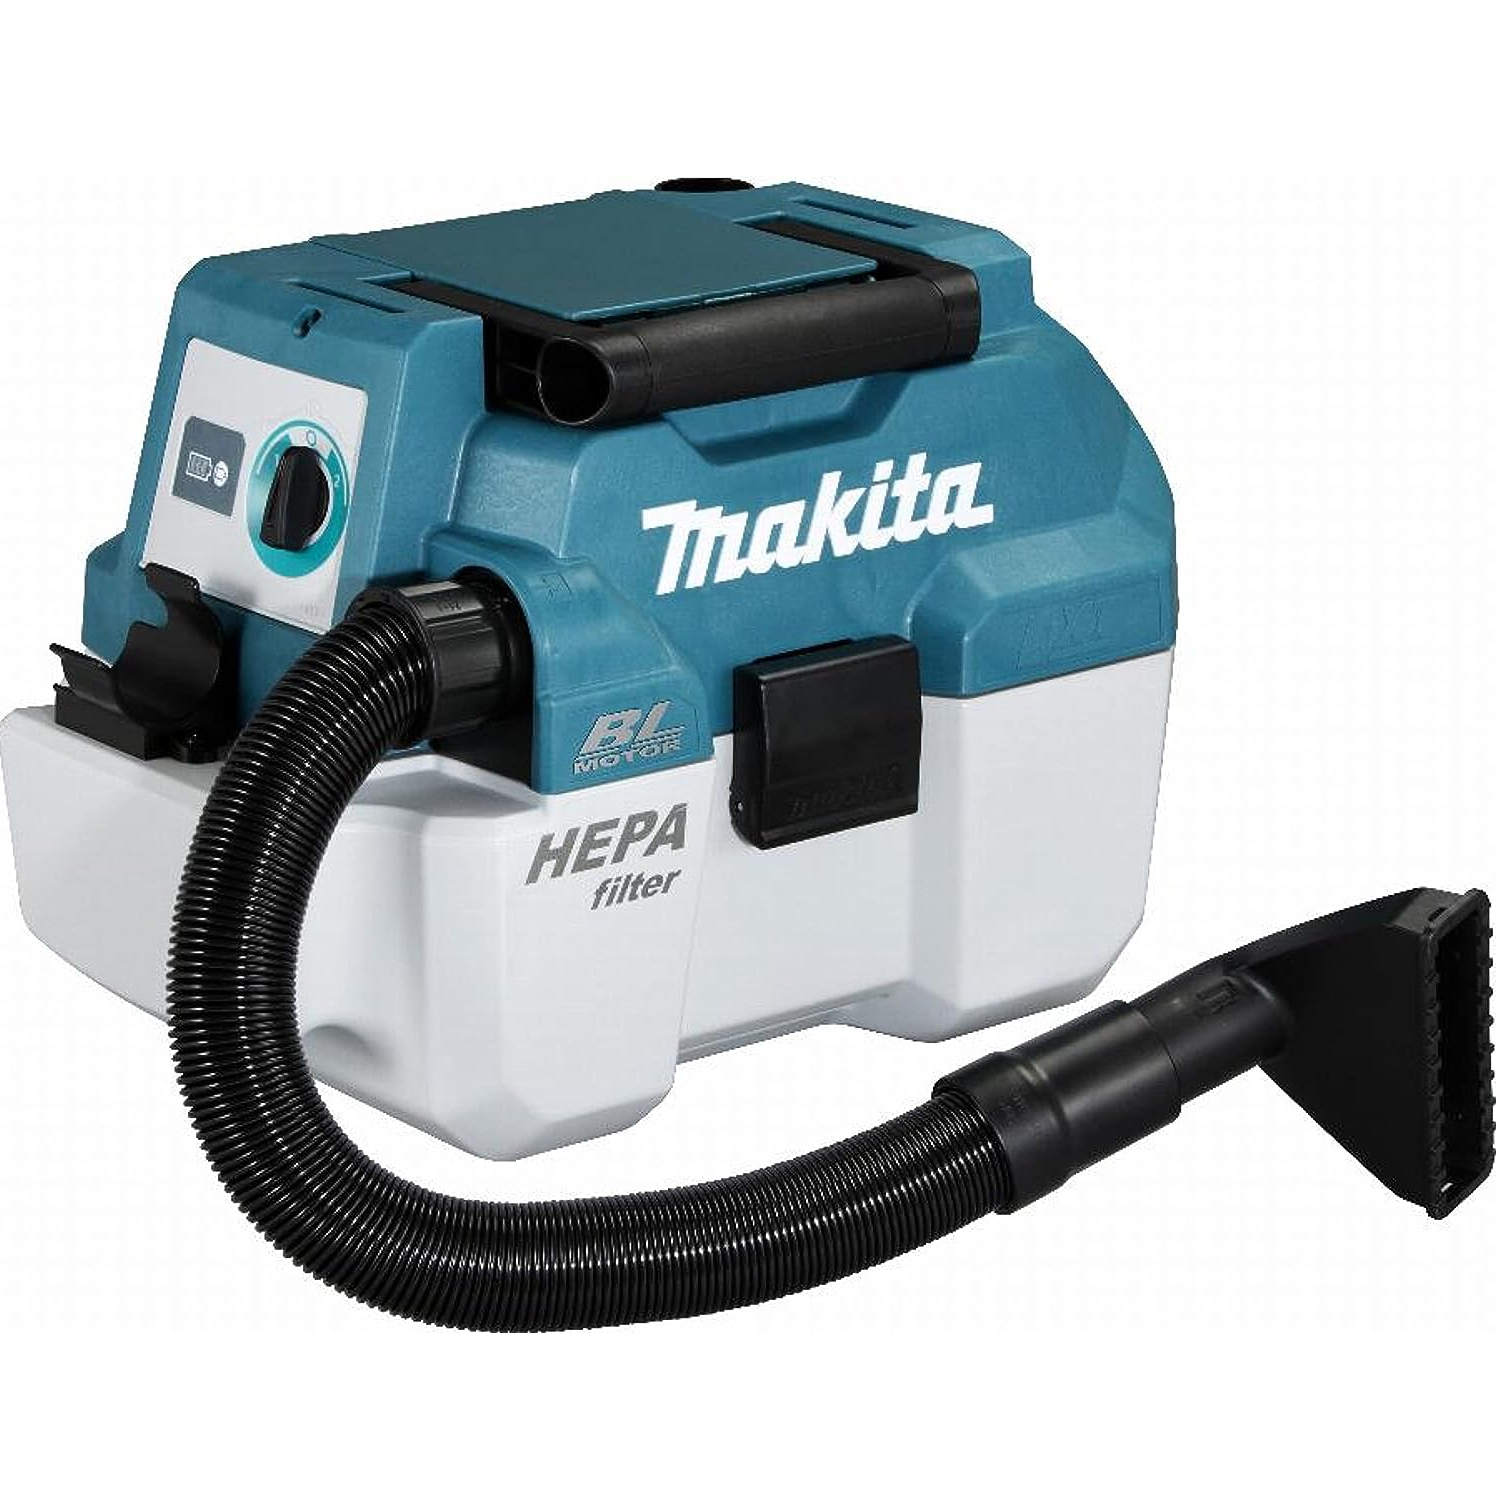 Makita vacuum cleaner – model: dvc750lz 18v lxt